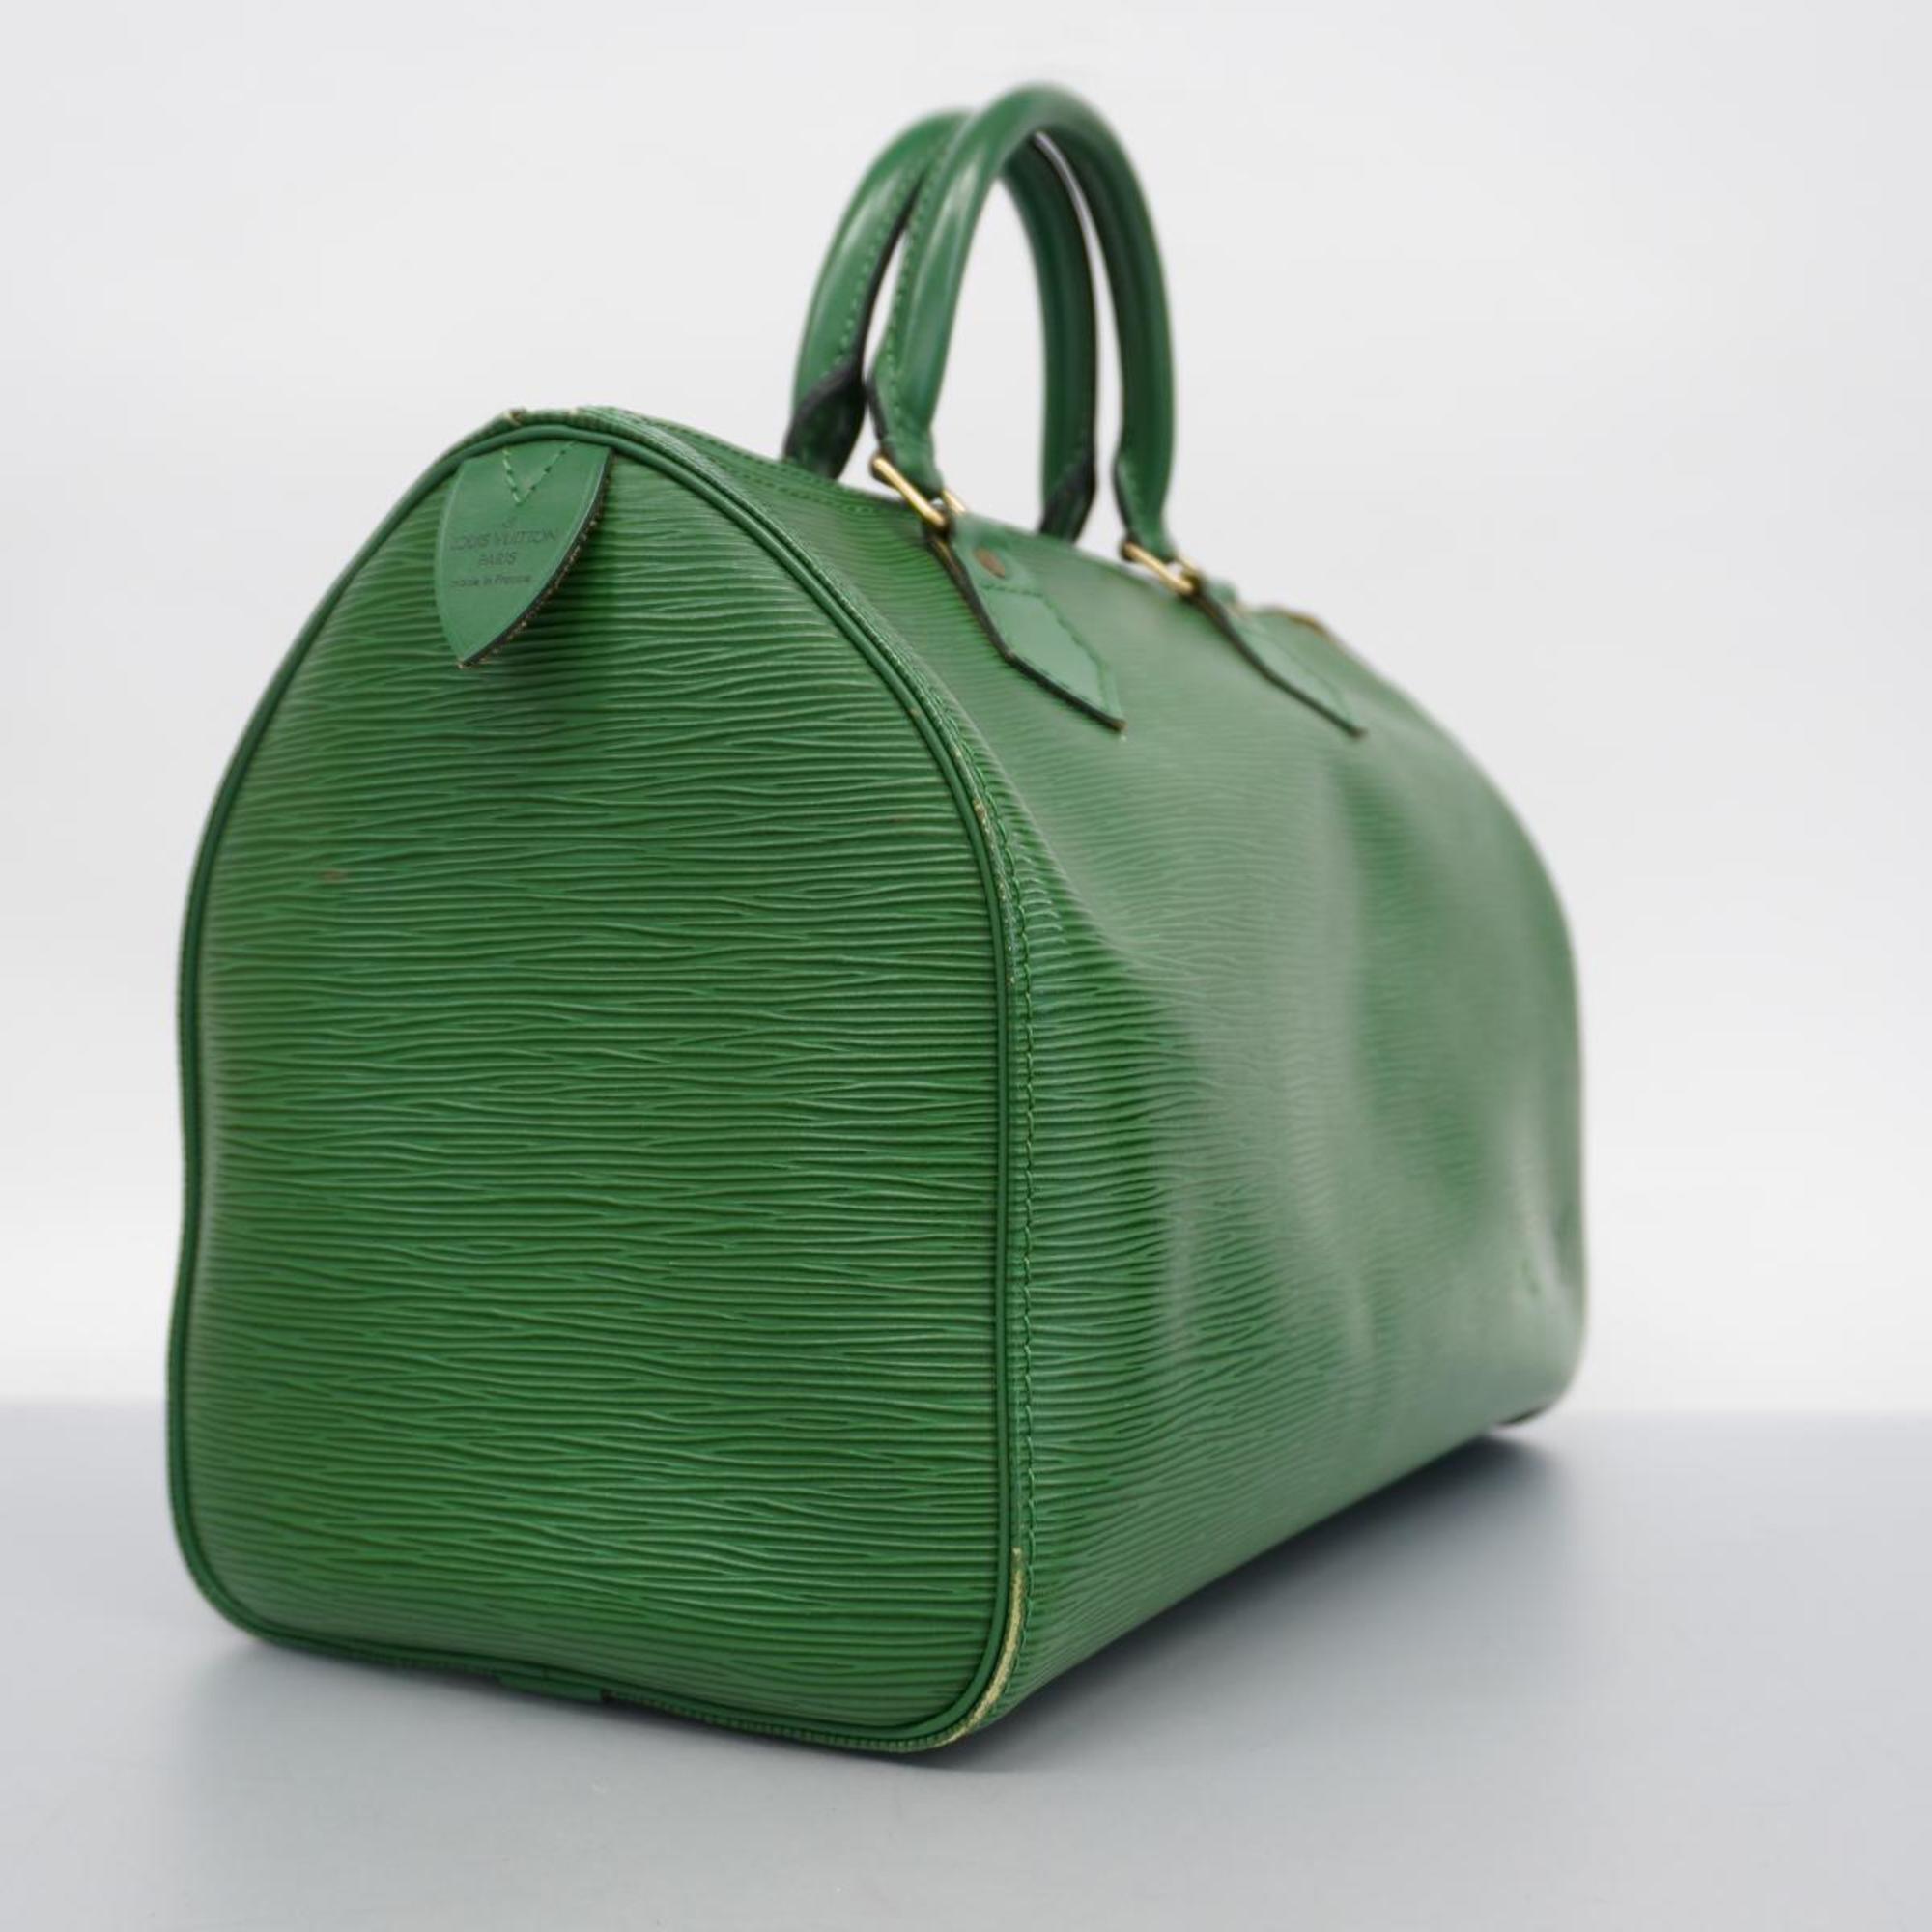 Louis Vuitton Handbag Epi Speedy 30 M43004 Borneo Green Ladies